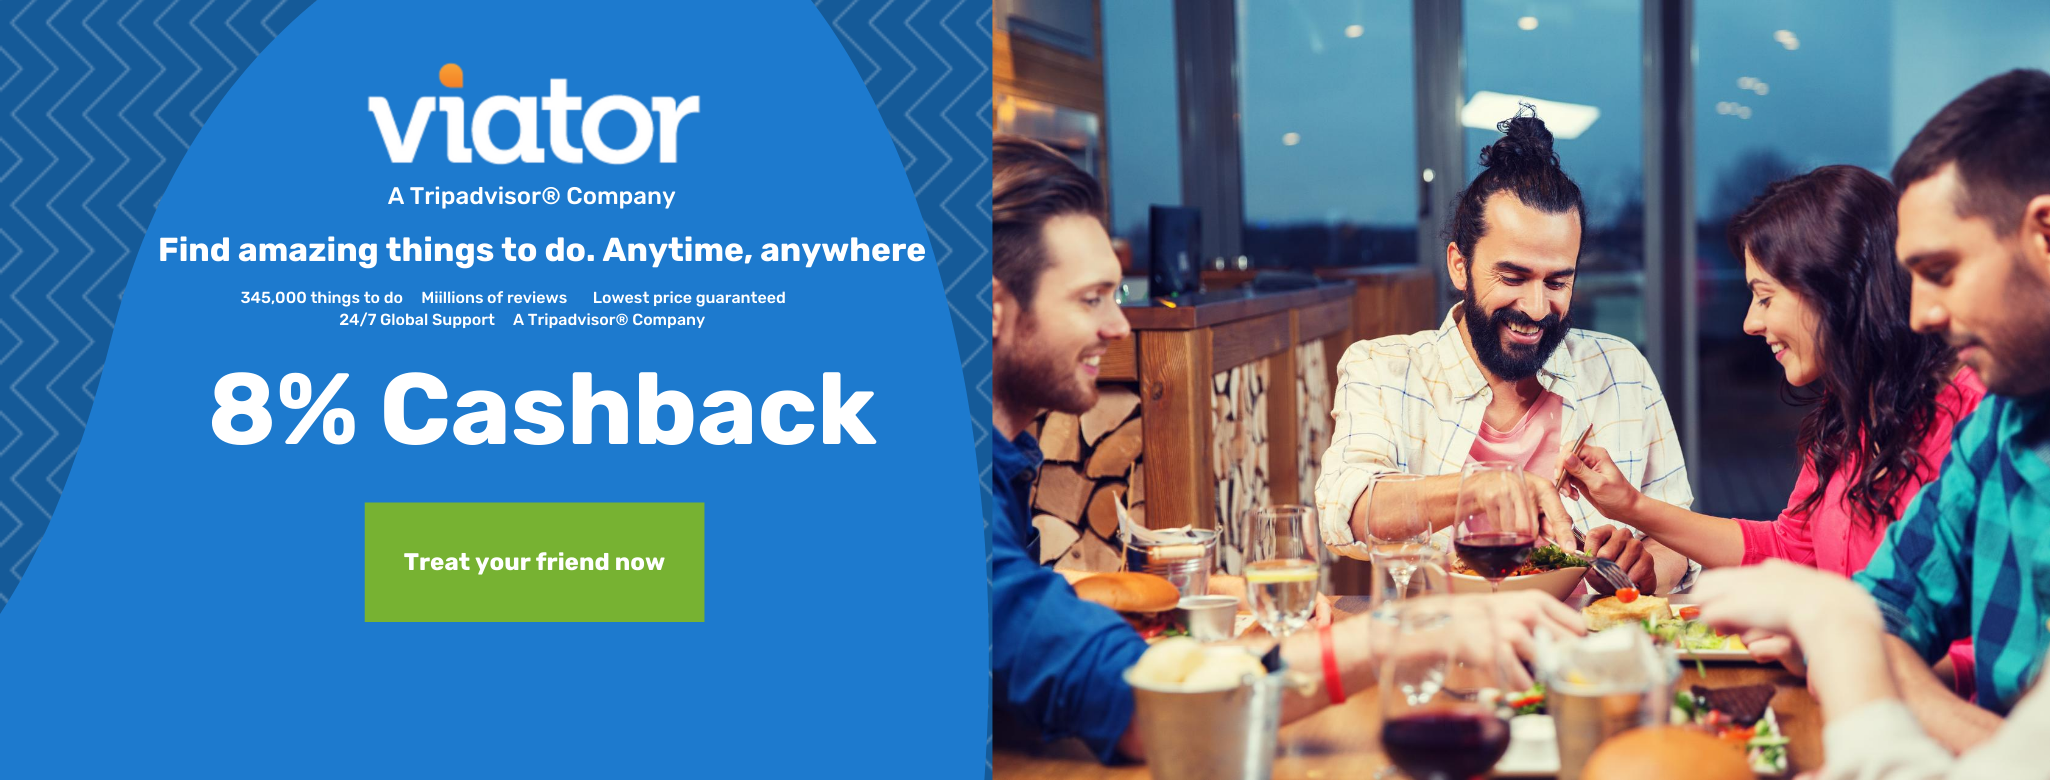 Viator - A Trip Advisor Company up to 8% Cashback